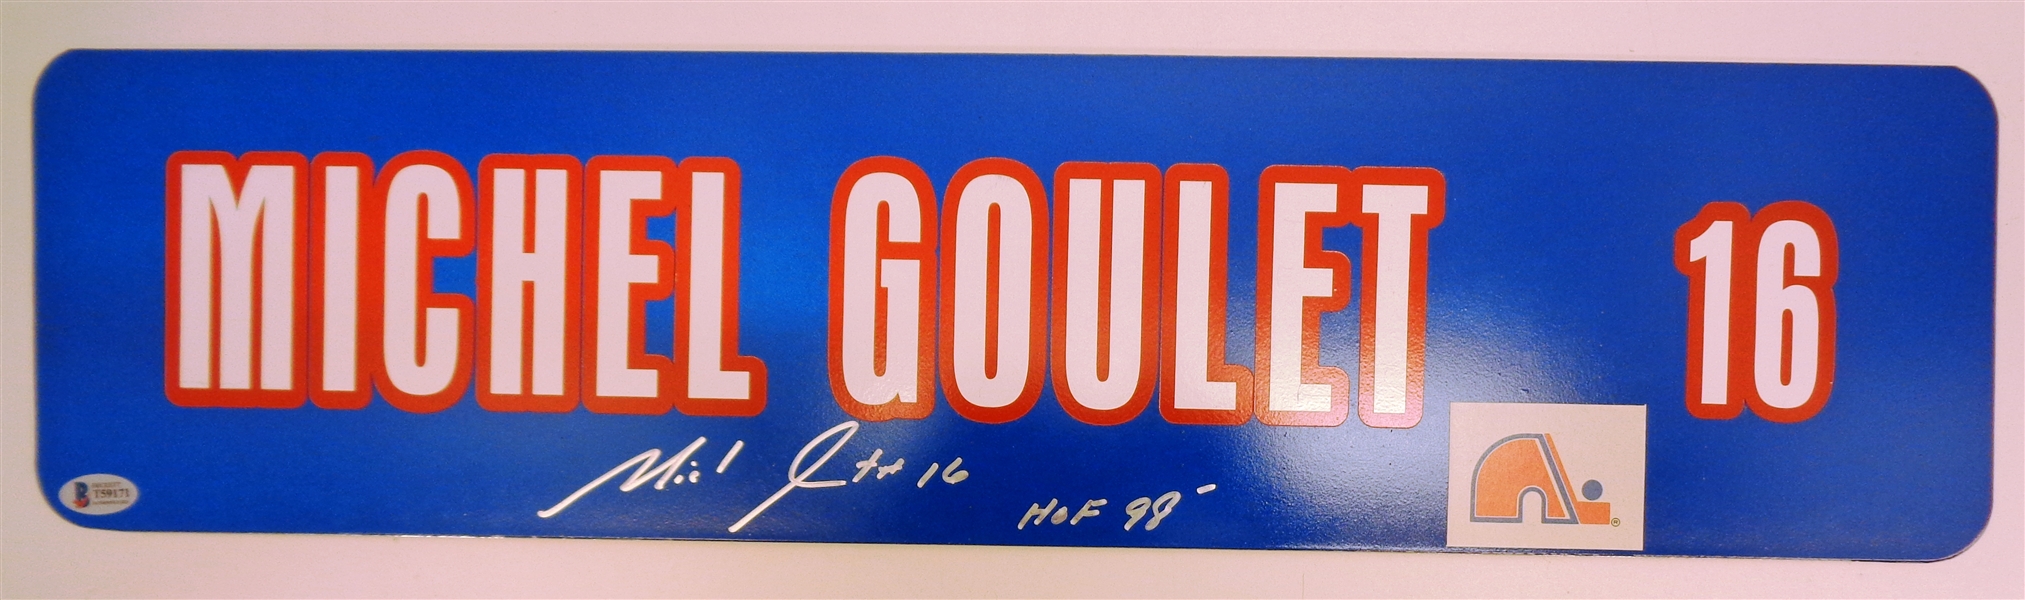 Michel Goulet Autographed 6x24 Street Sign